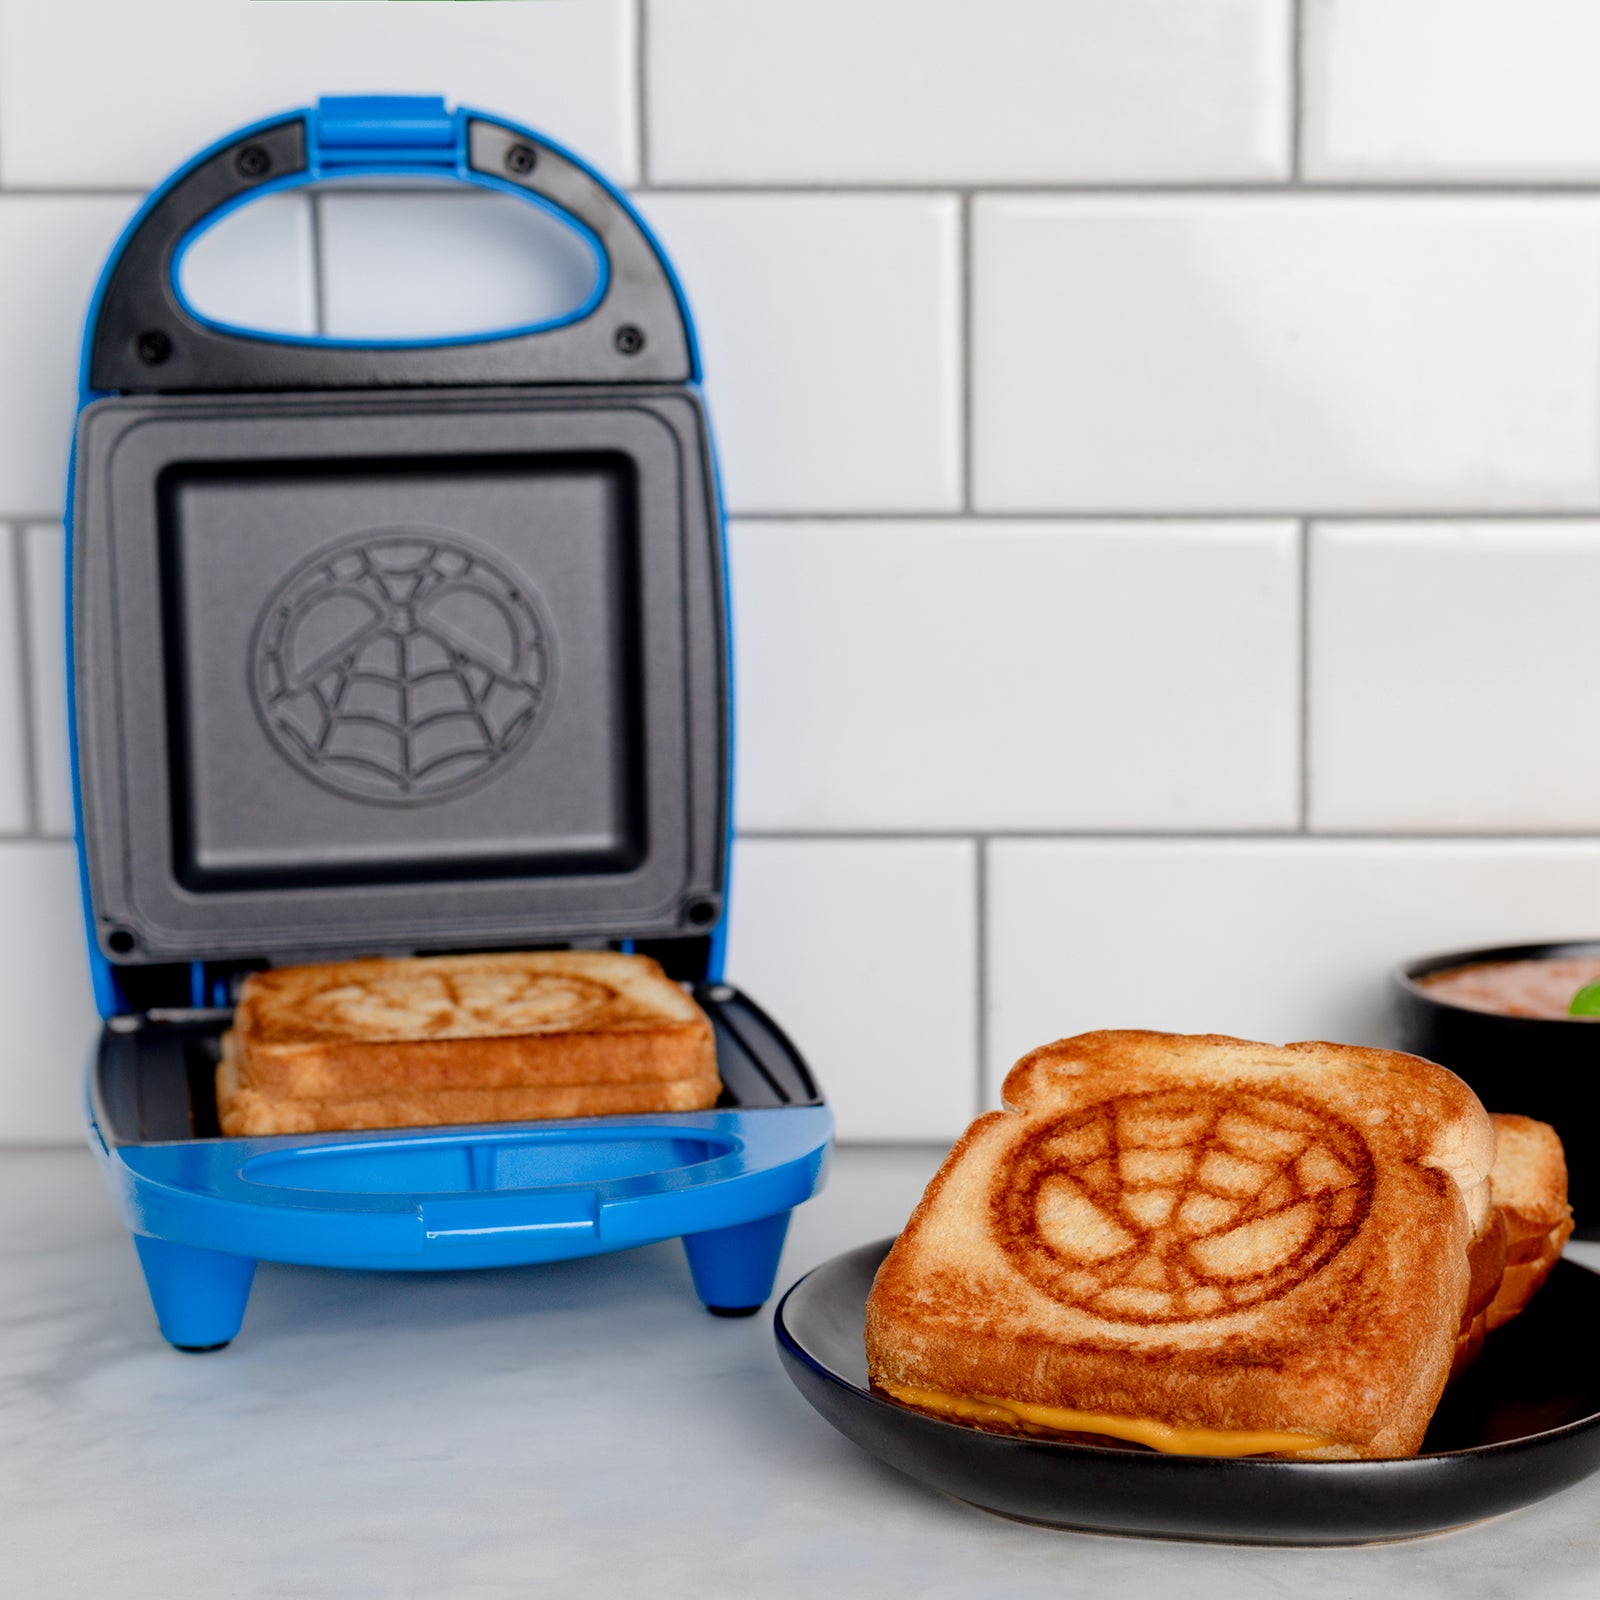 Uncanny Brands Star Wars Death Star Single Grilled Cheese Sandwich Maker GameStop Exclusive